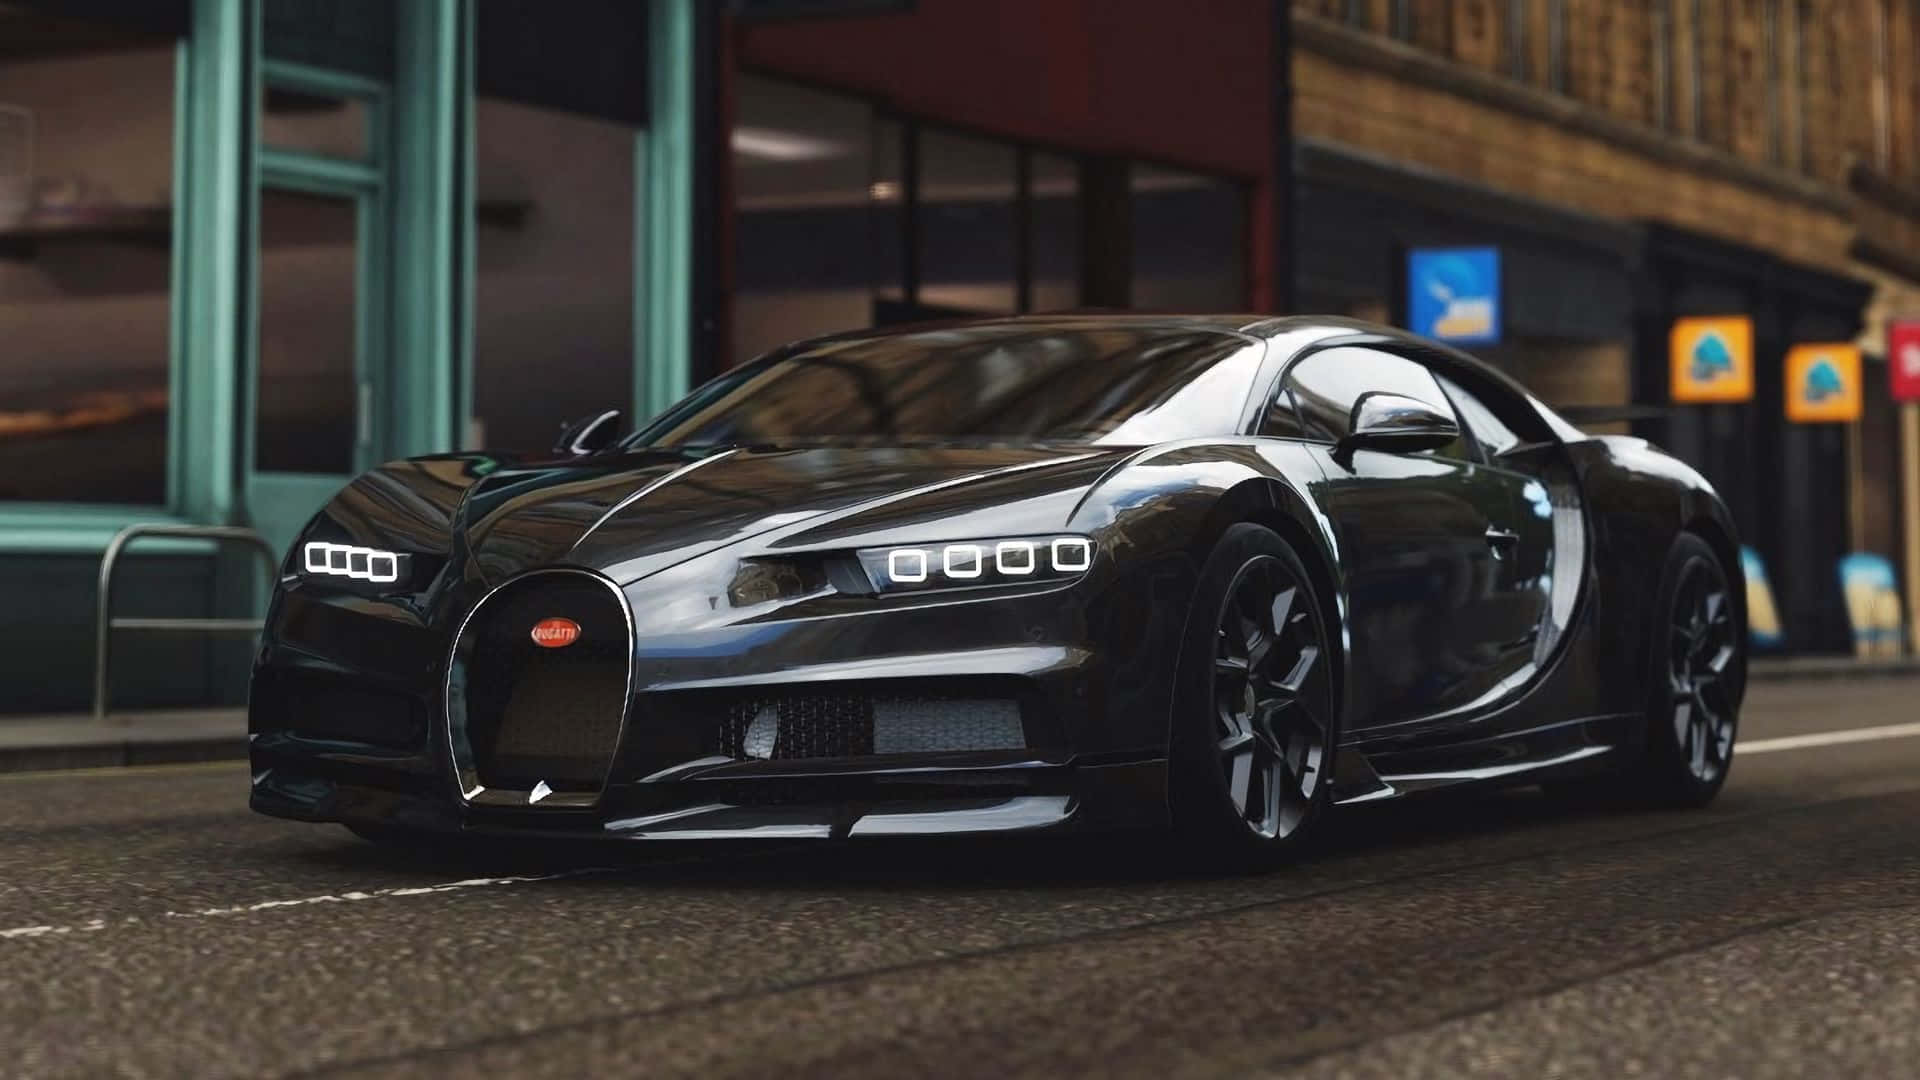 Stunning Bugatti Chiron in Motion Wallpaper